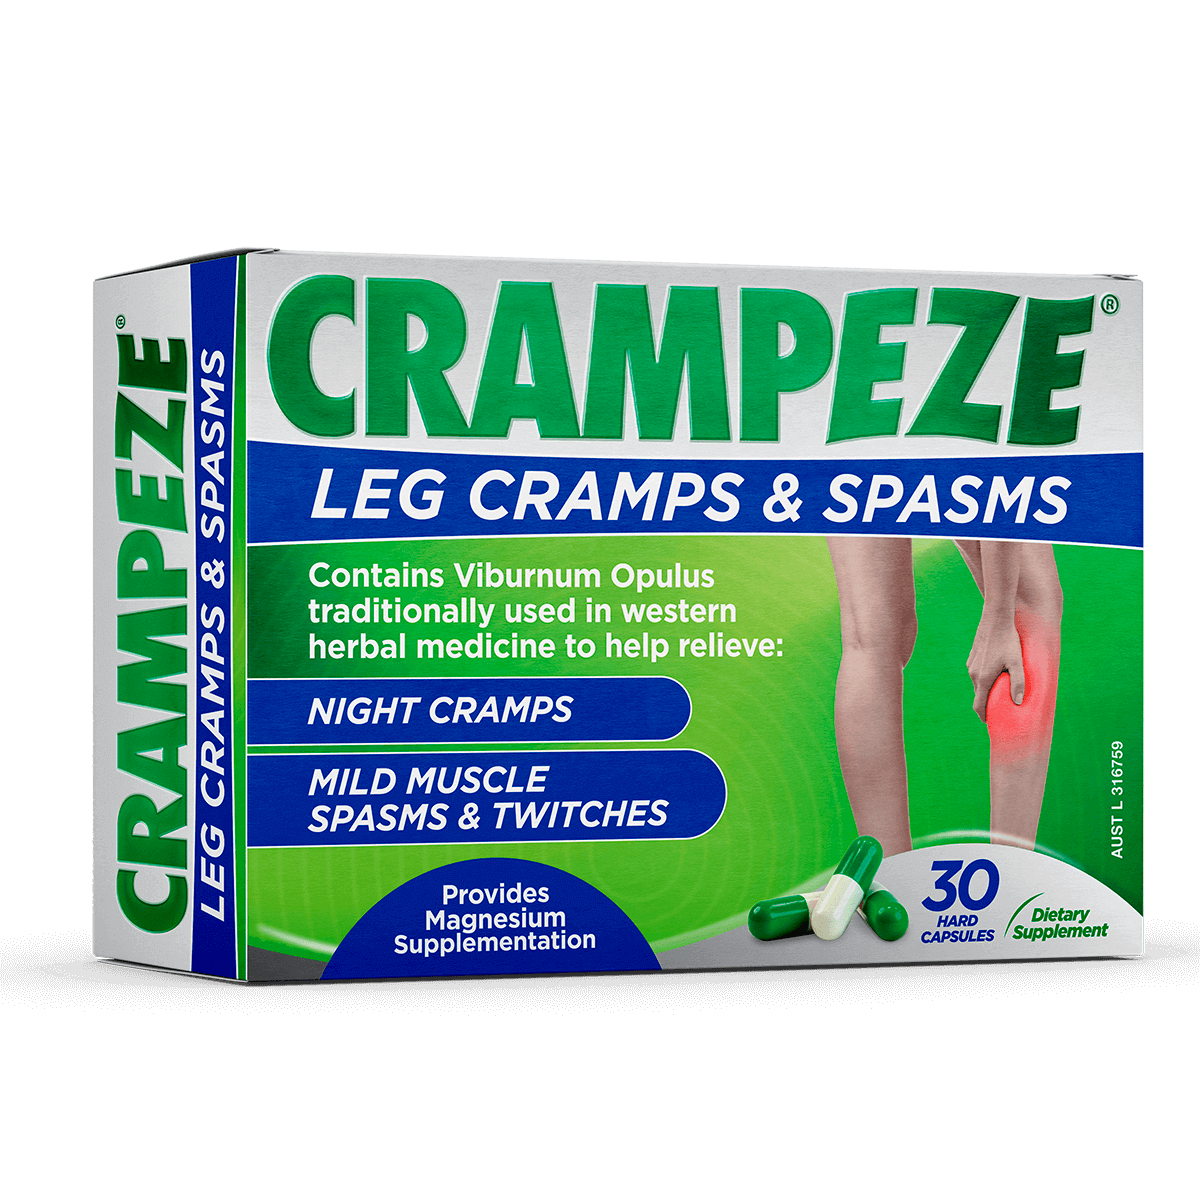 I use Crampeze on a regular / ongoing basis